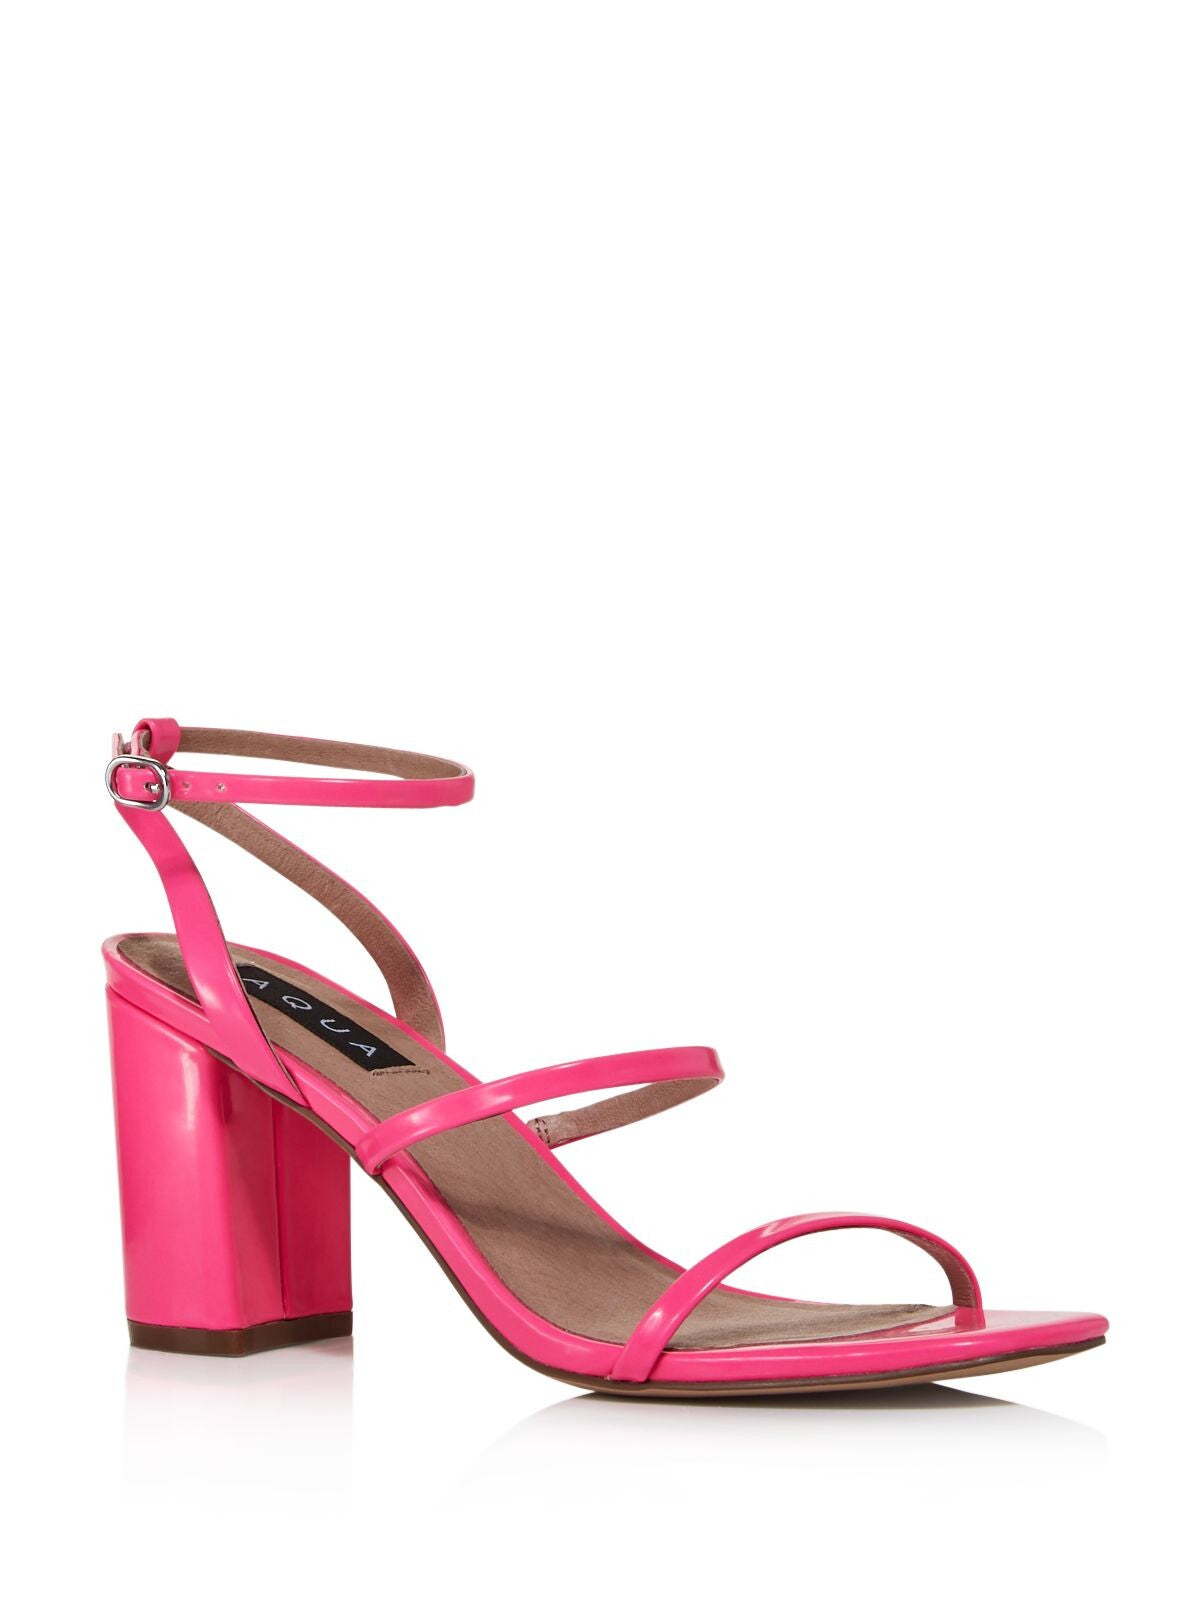 AQUA Womens Pink Ankle Strap Maika Square Toe Block Heel Buckle Dress Sandals Shoes 7.5 M